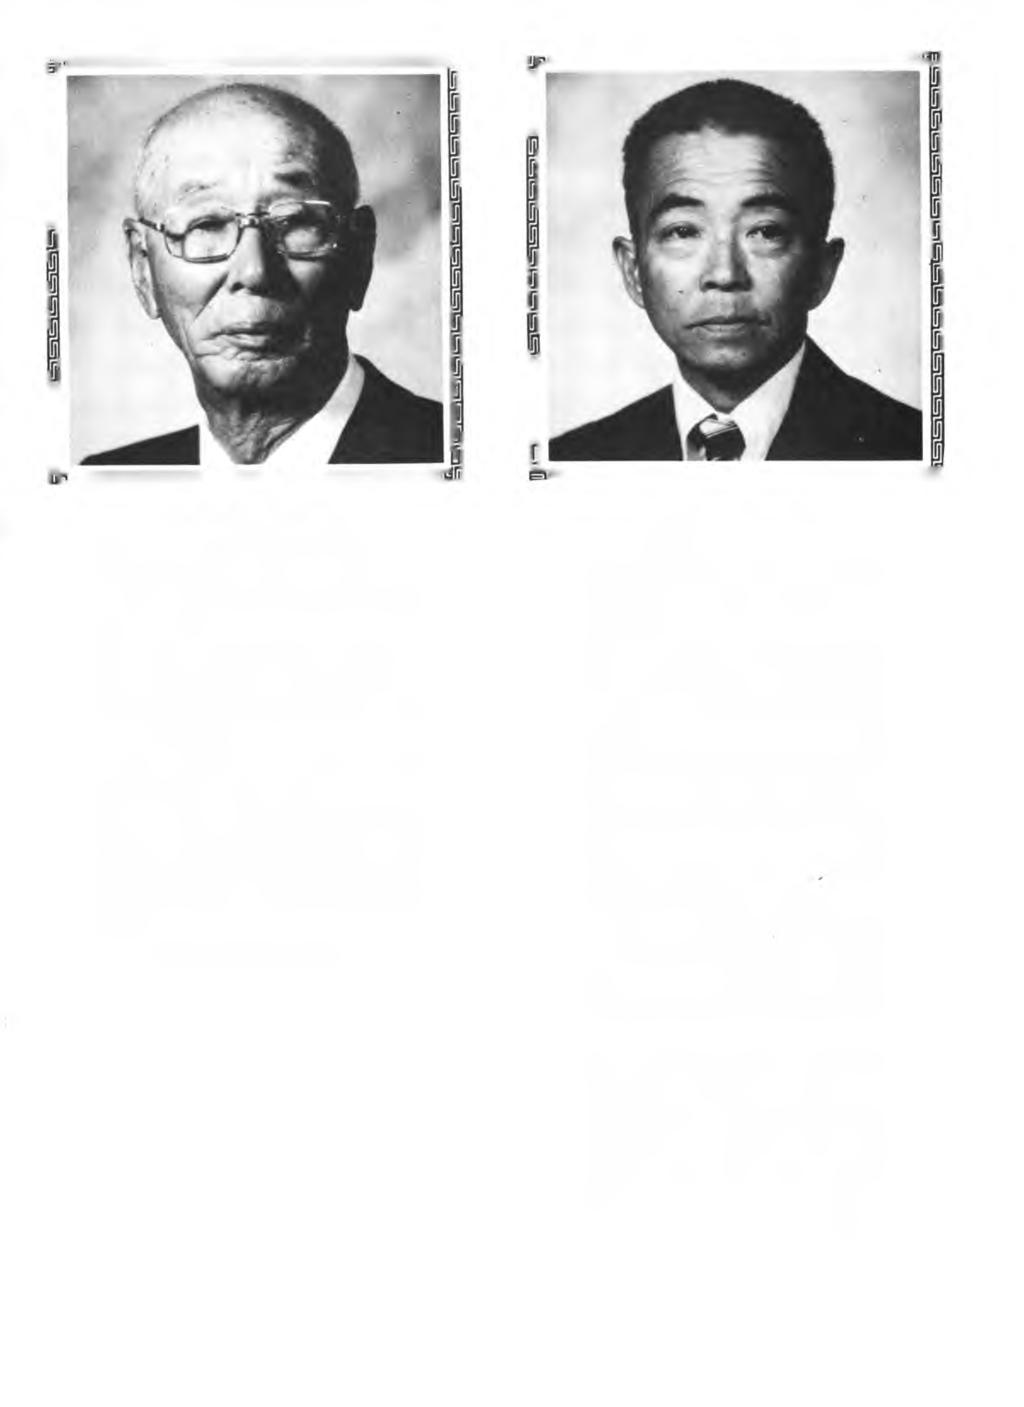 VERIMON TASAKA Mr. Vernon Tasaka was born on October 2 9,1928 in Kauai. He isthe son of Kenichi and Asayo Tasaka. Both his parents were born on Kauai and now they are retired.